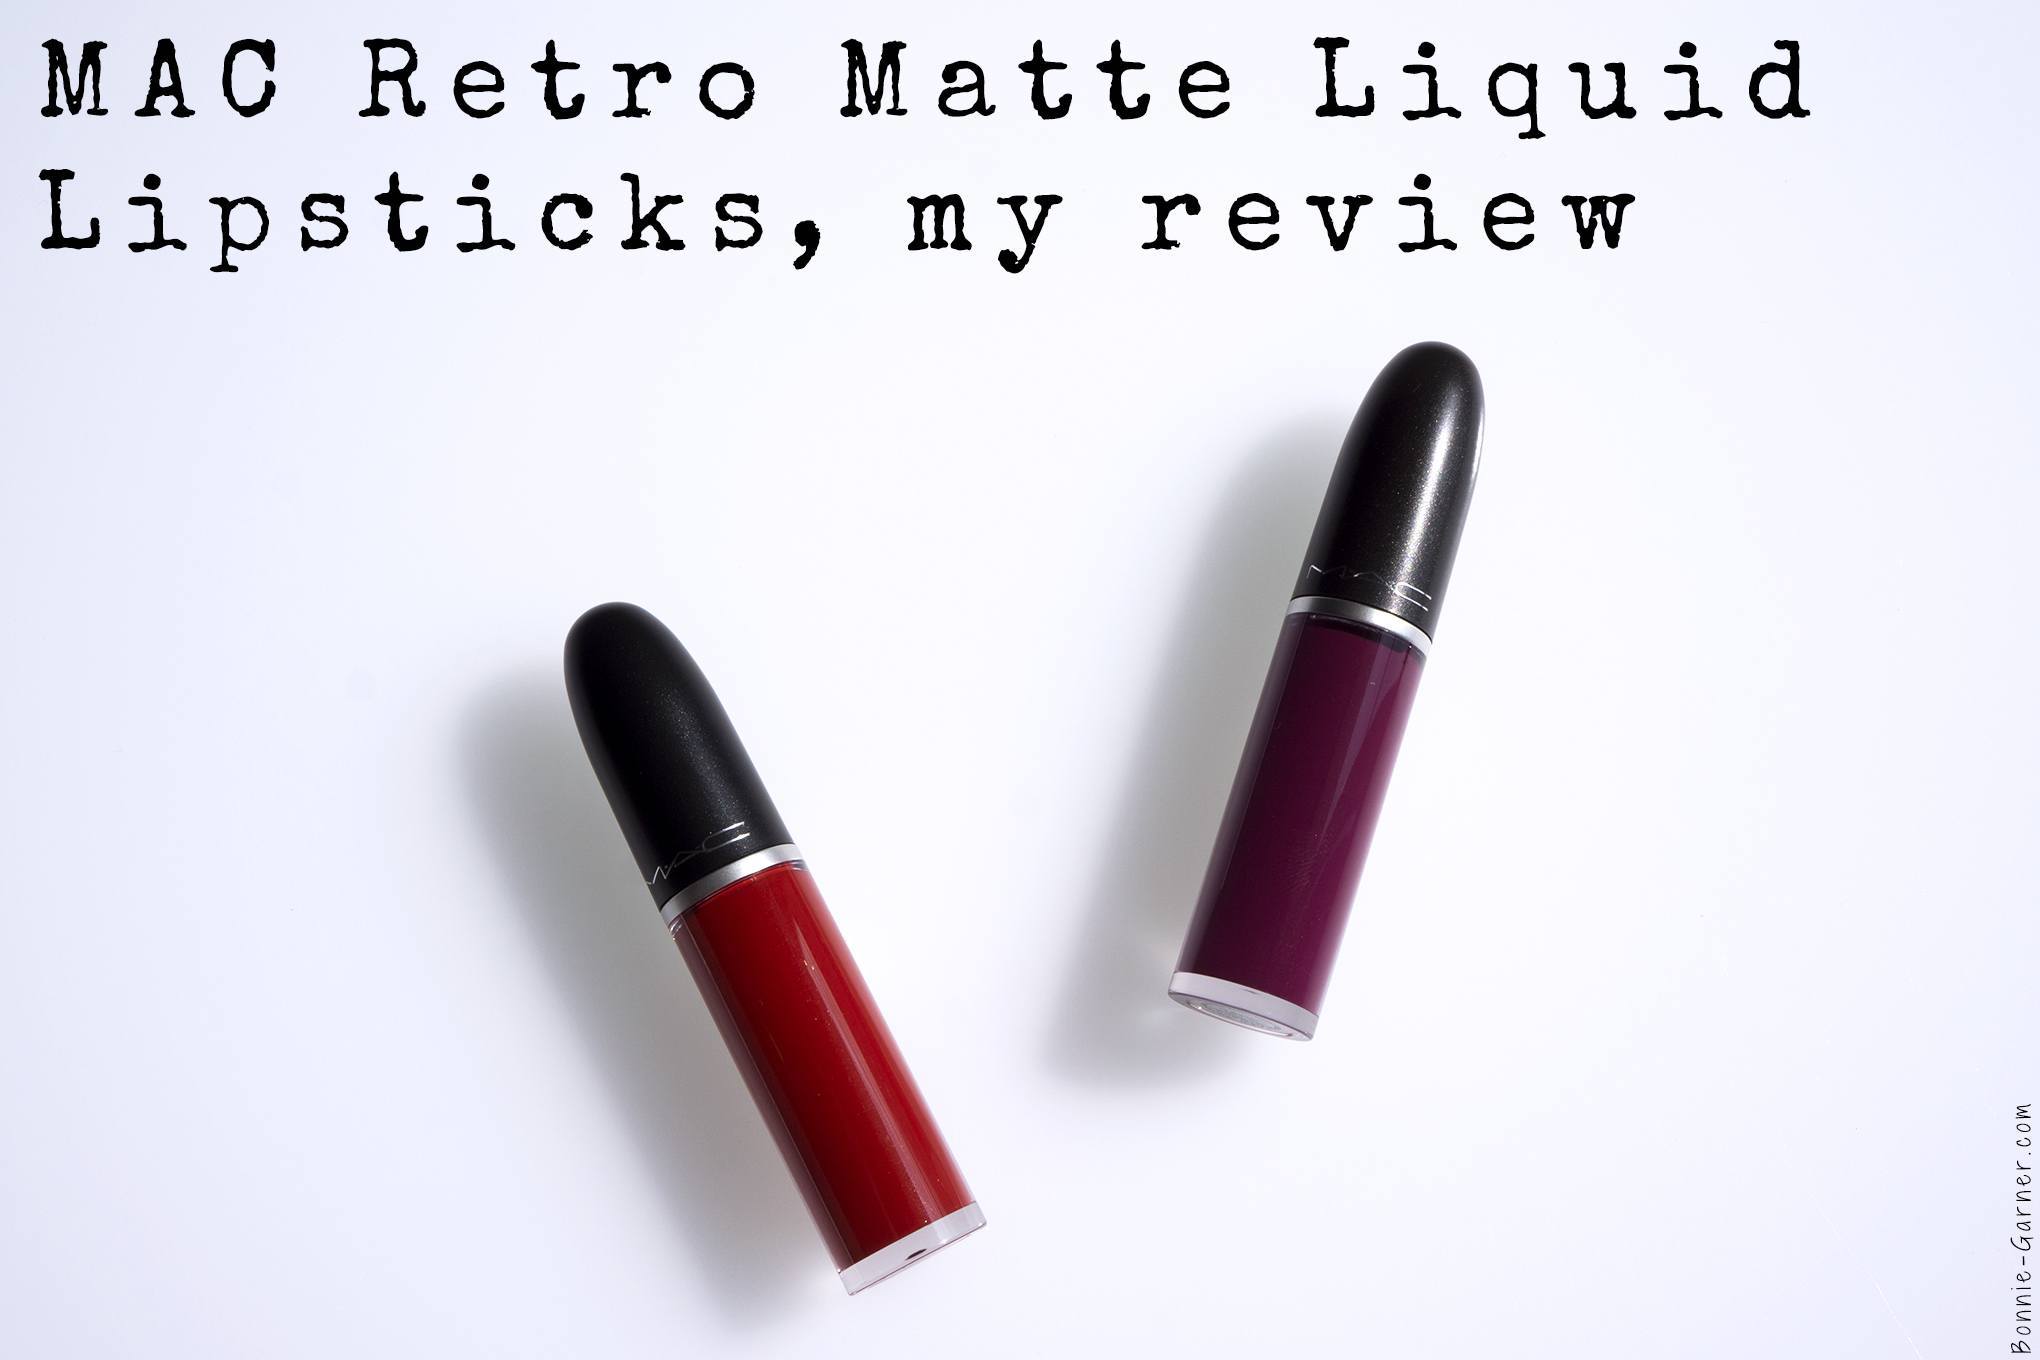 MAC Retro Matte Liquid Lipstick, my review